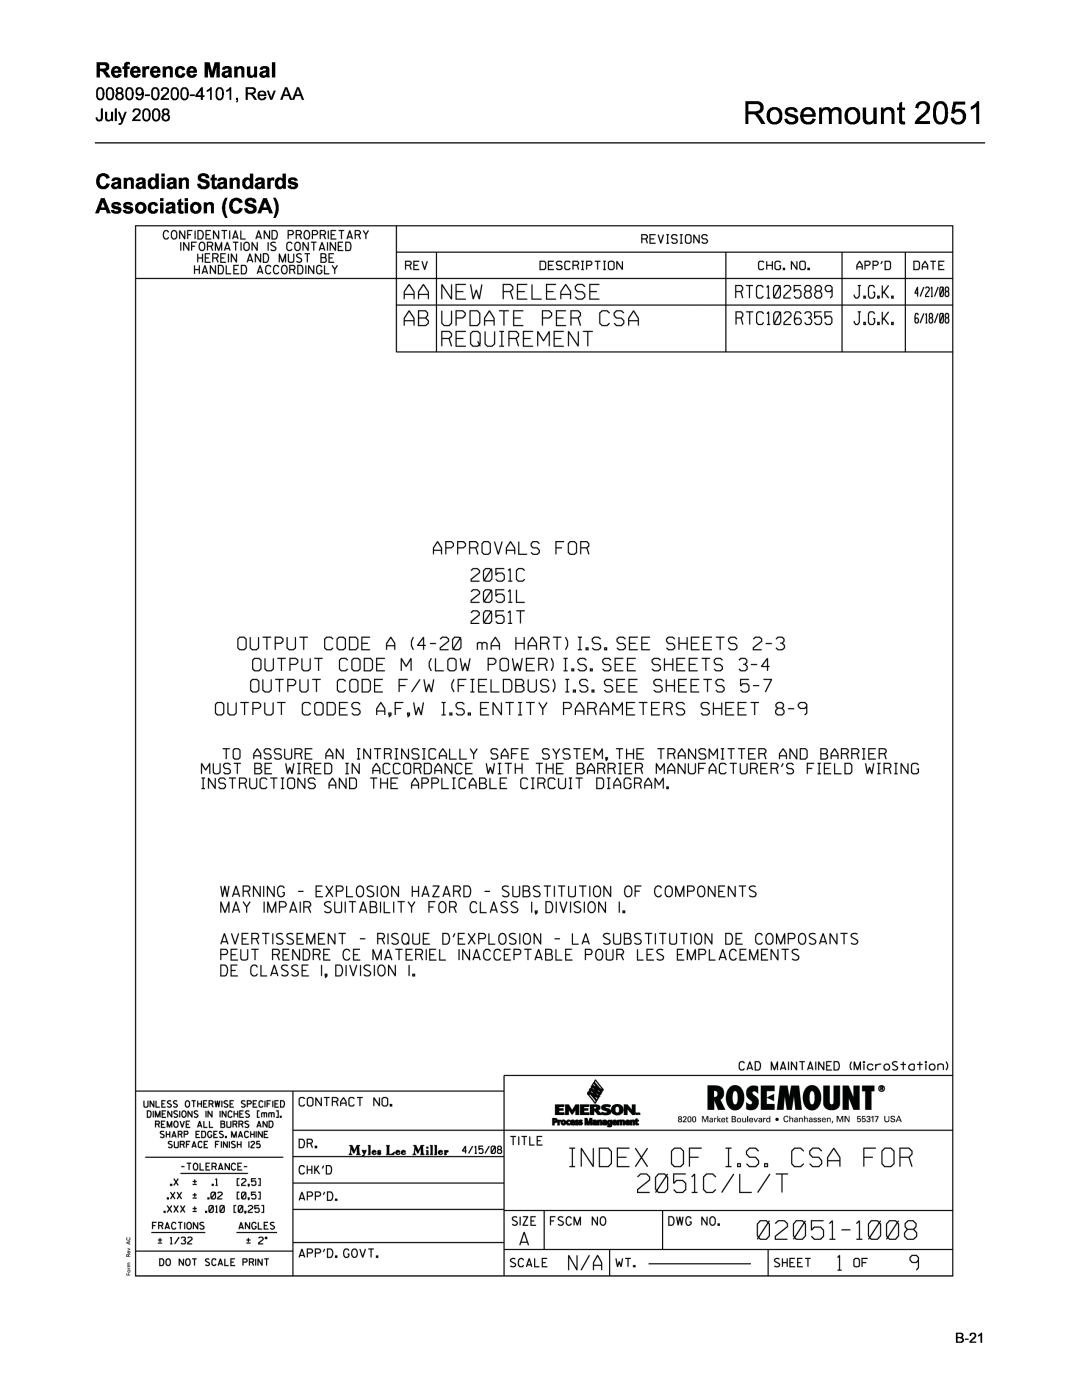 Emerson Process Management 2051 manual Canadian Standards Association CSA, Rosemount, Reference Manual, B-21 